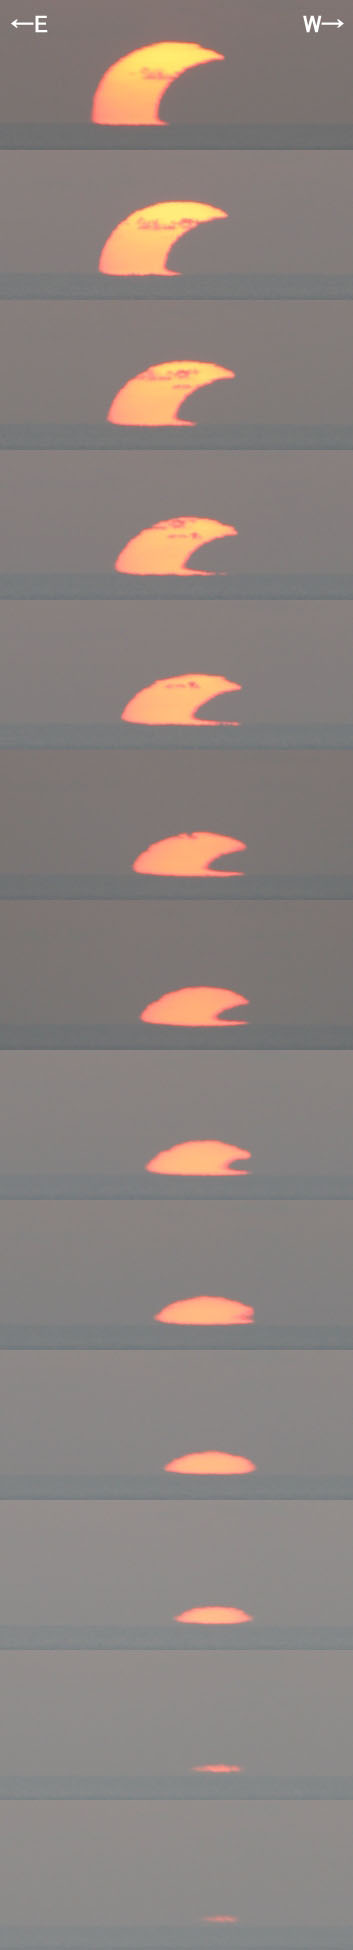 2010.1.15 与論島の部分日食連続画像2